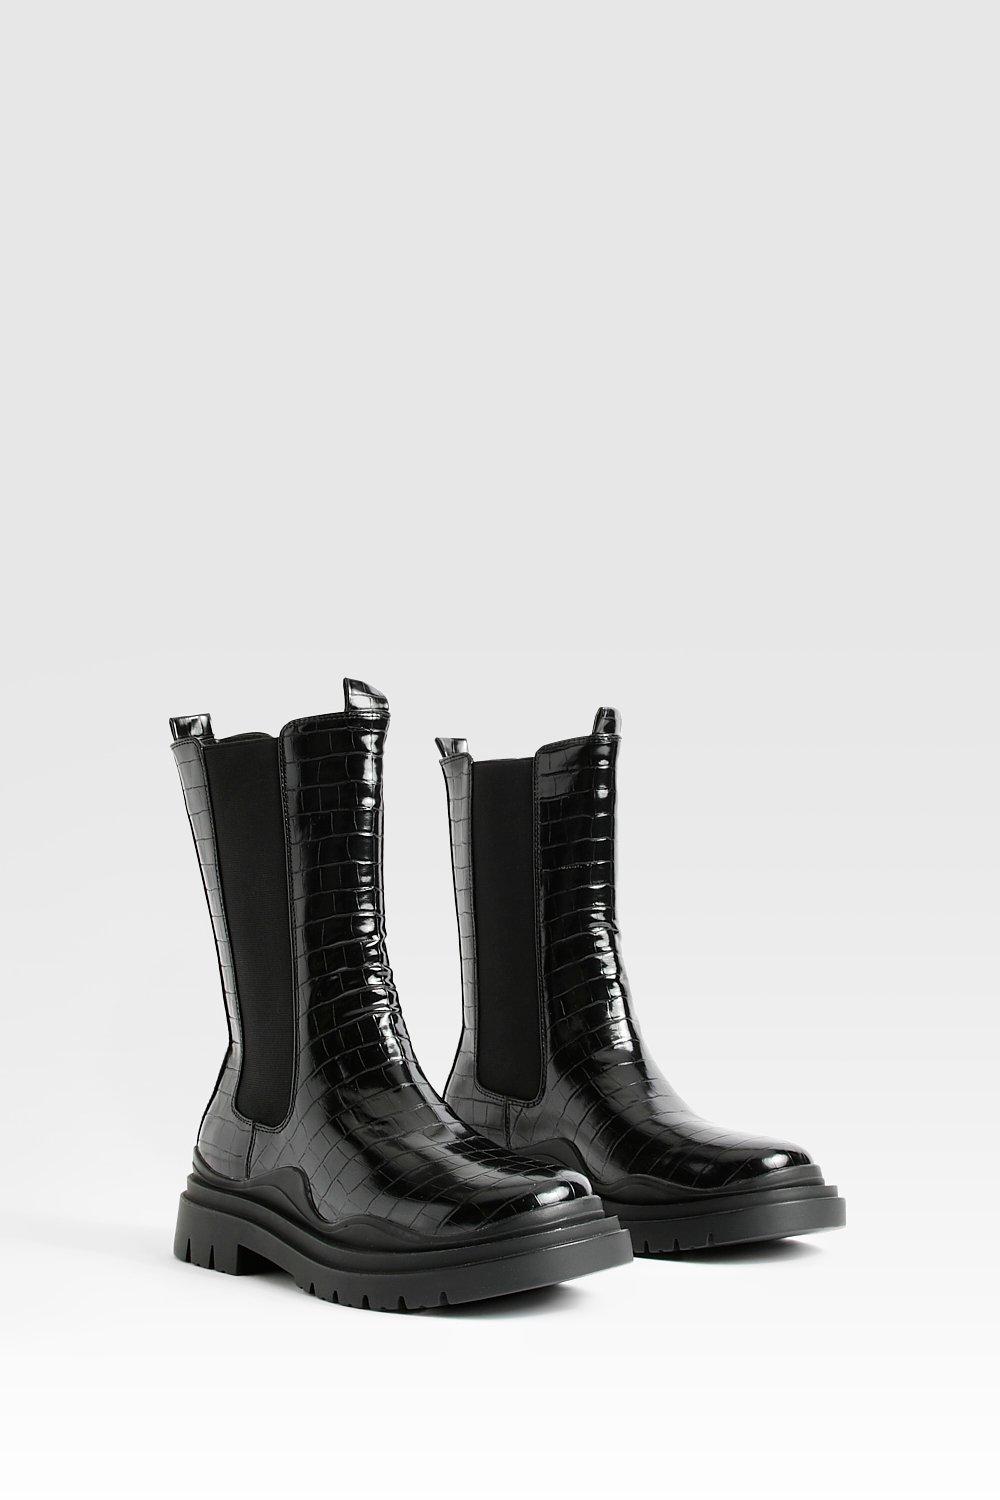 wide fit calf height croc chelsea boots - noir - 38, noir